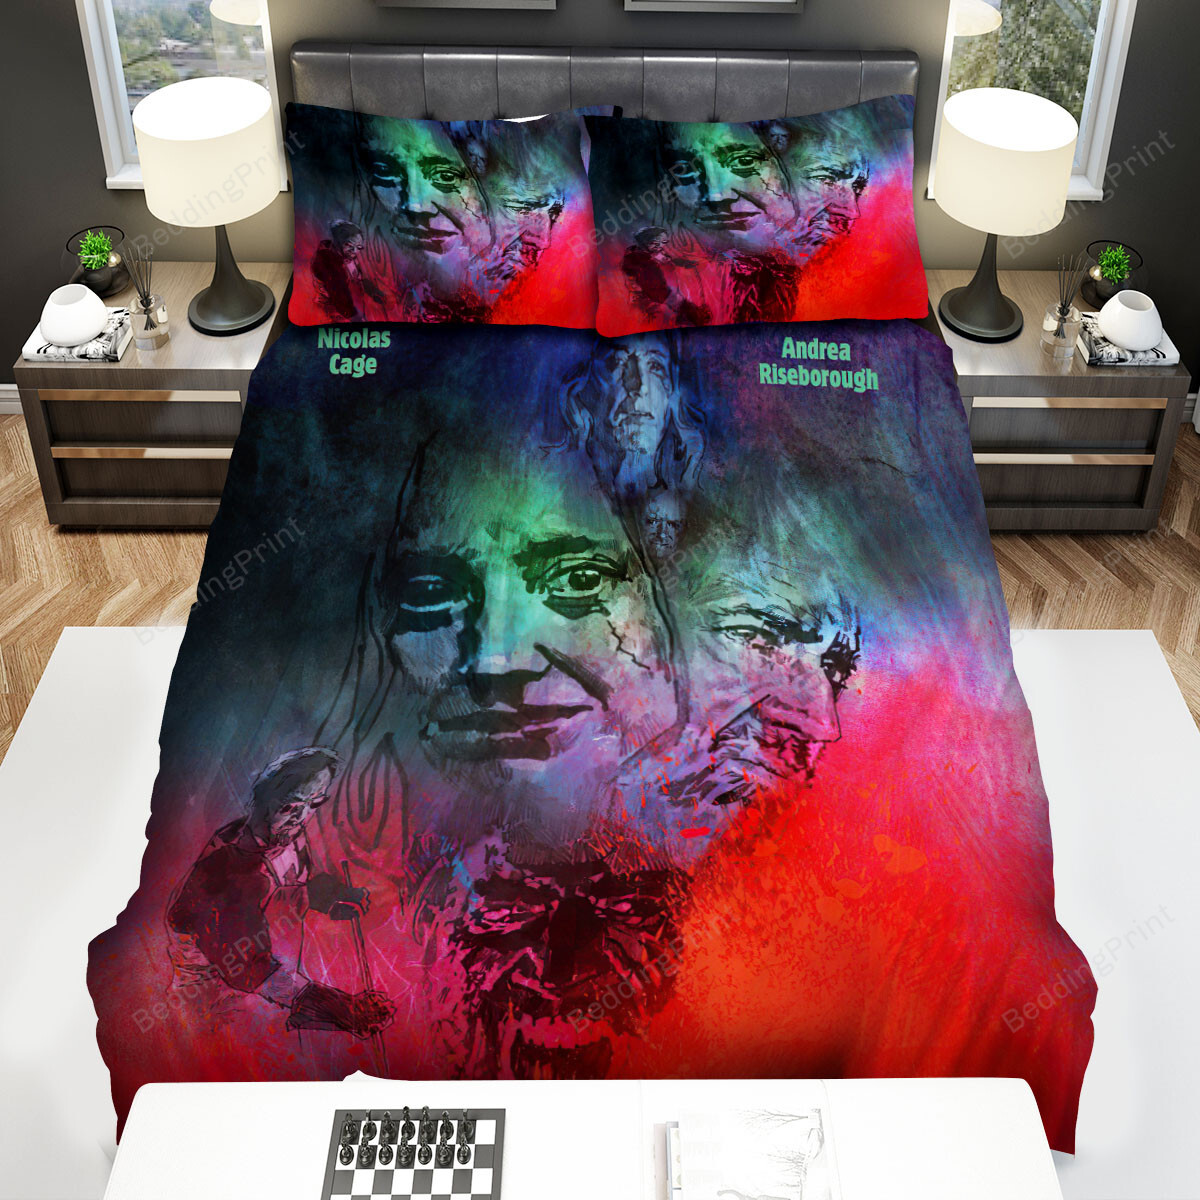 Mandy (I) Movie Art Bed Sheets Spread Comforter Duvet Cover Bedding Sets Ver 33